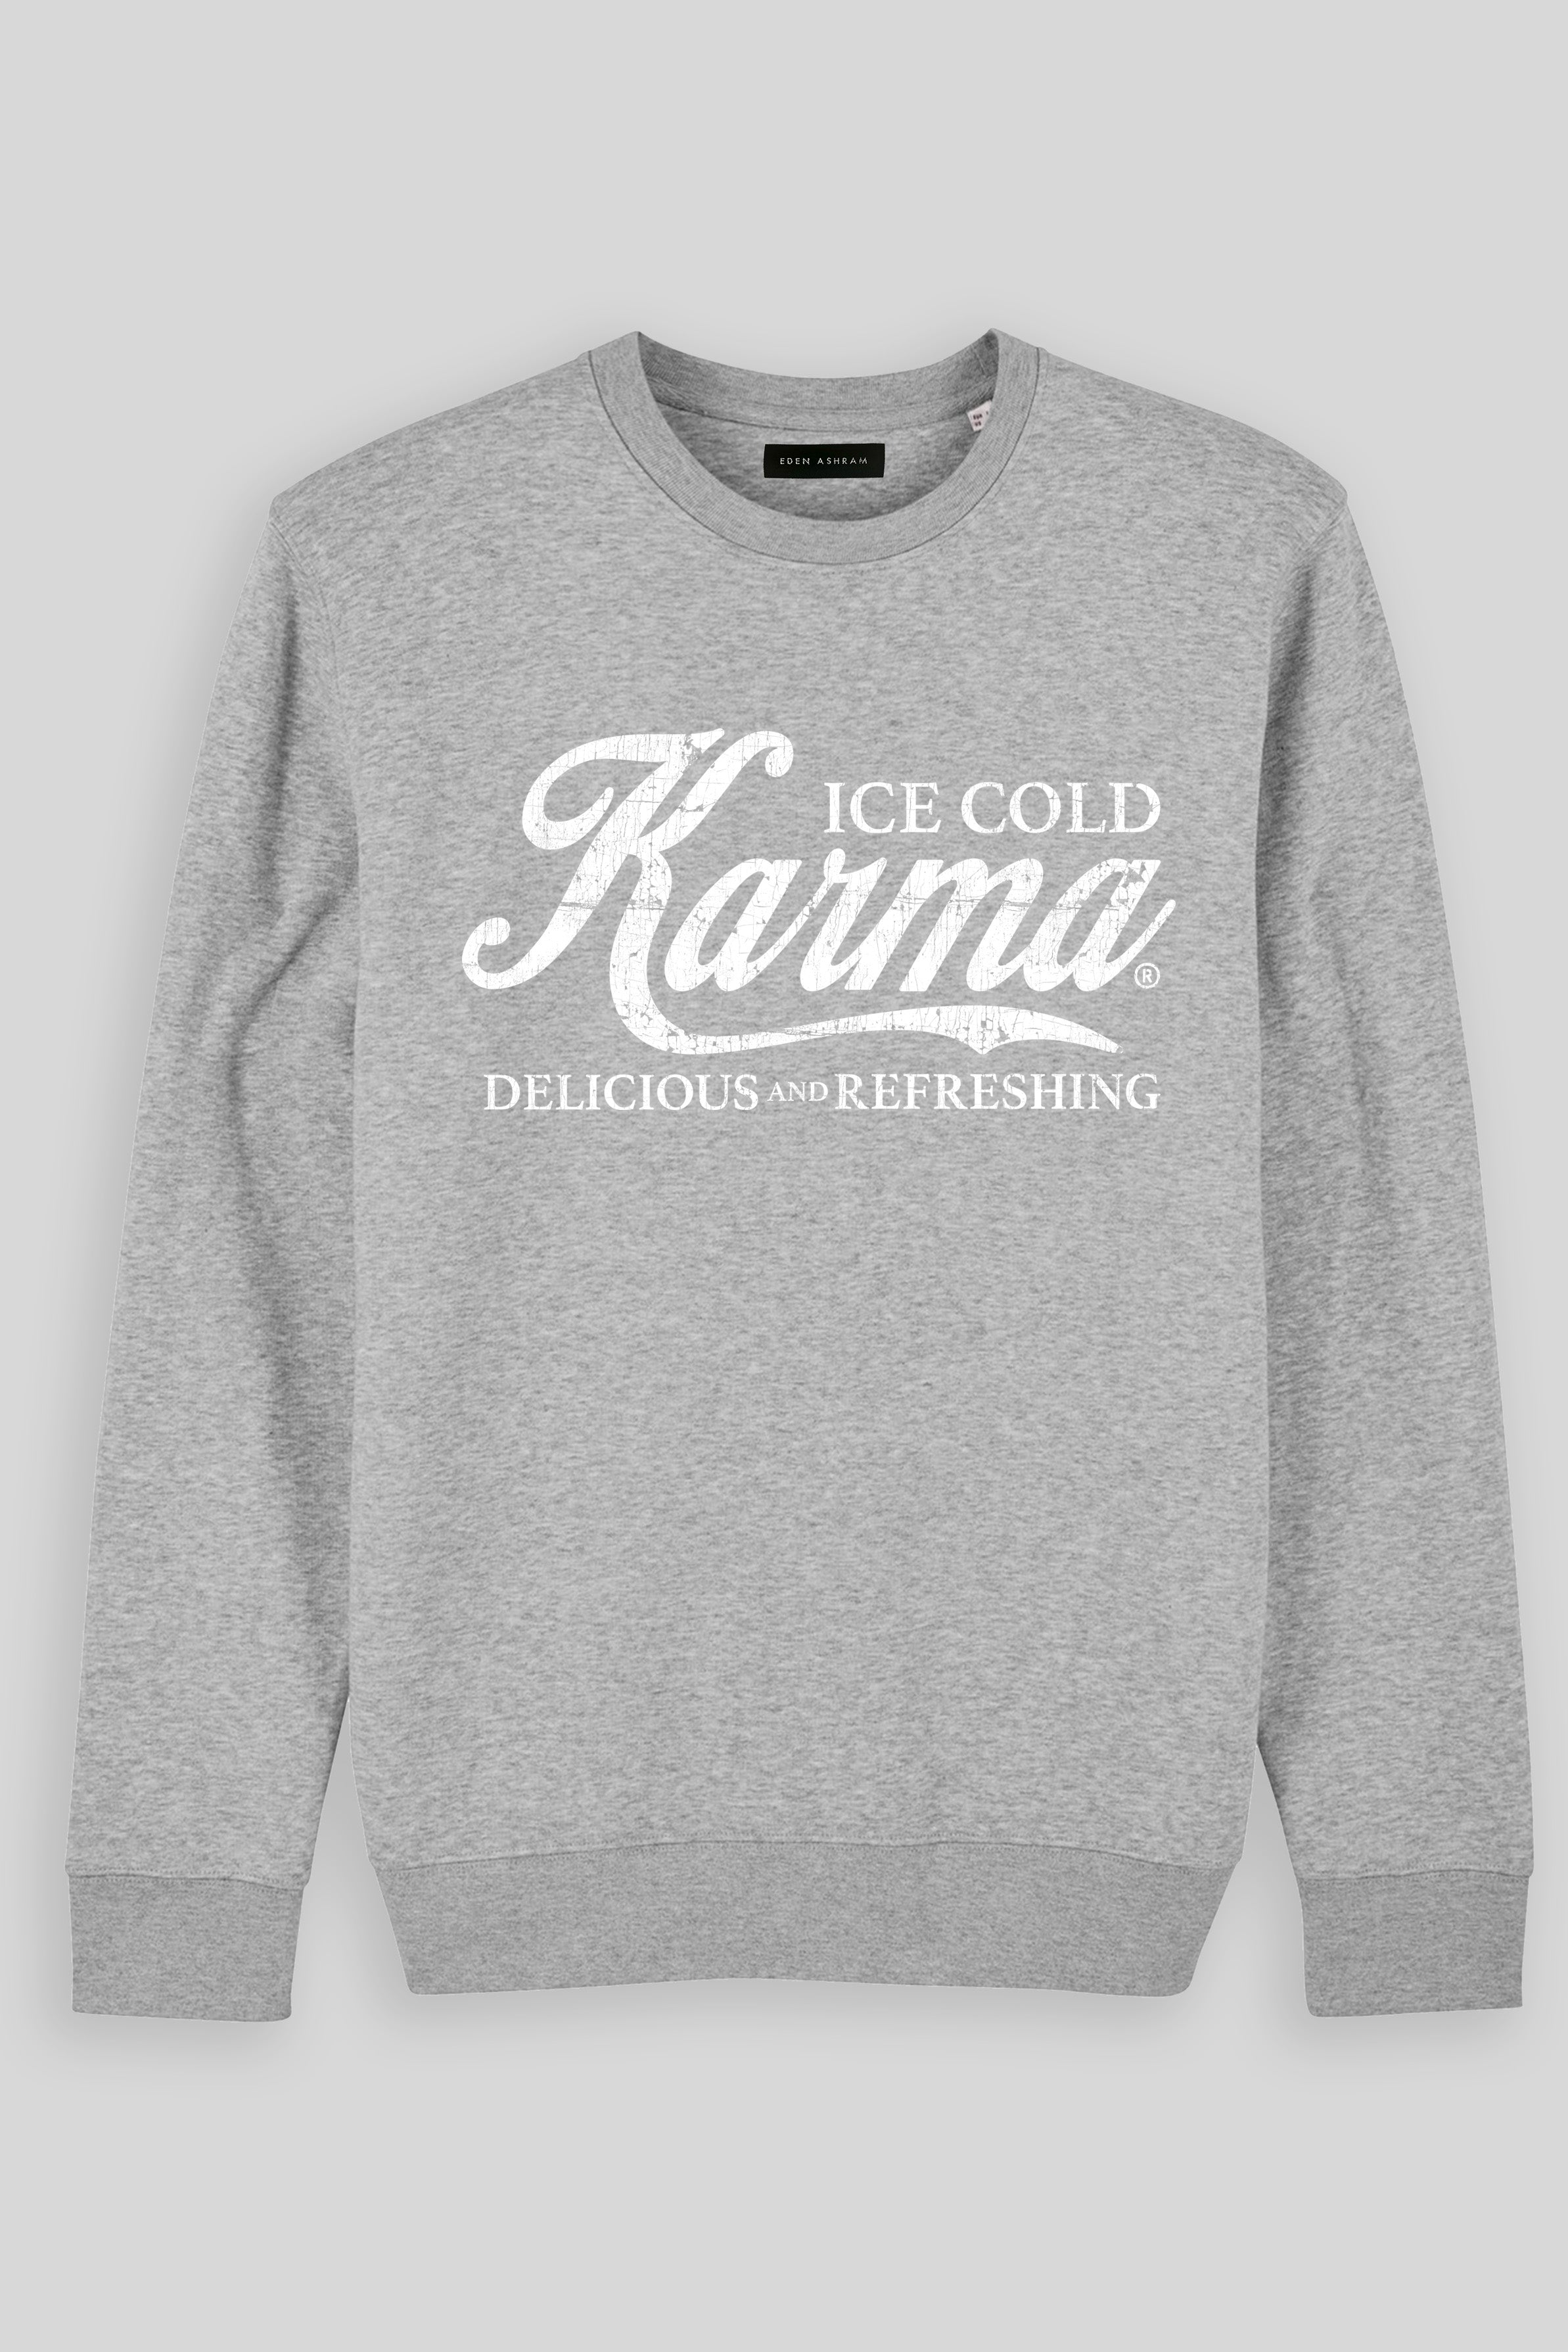 Eden Ashram Ice Cold Karma Premium Crew Neck Sweatshirt Heather Grey